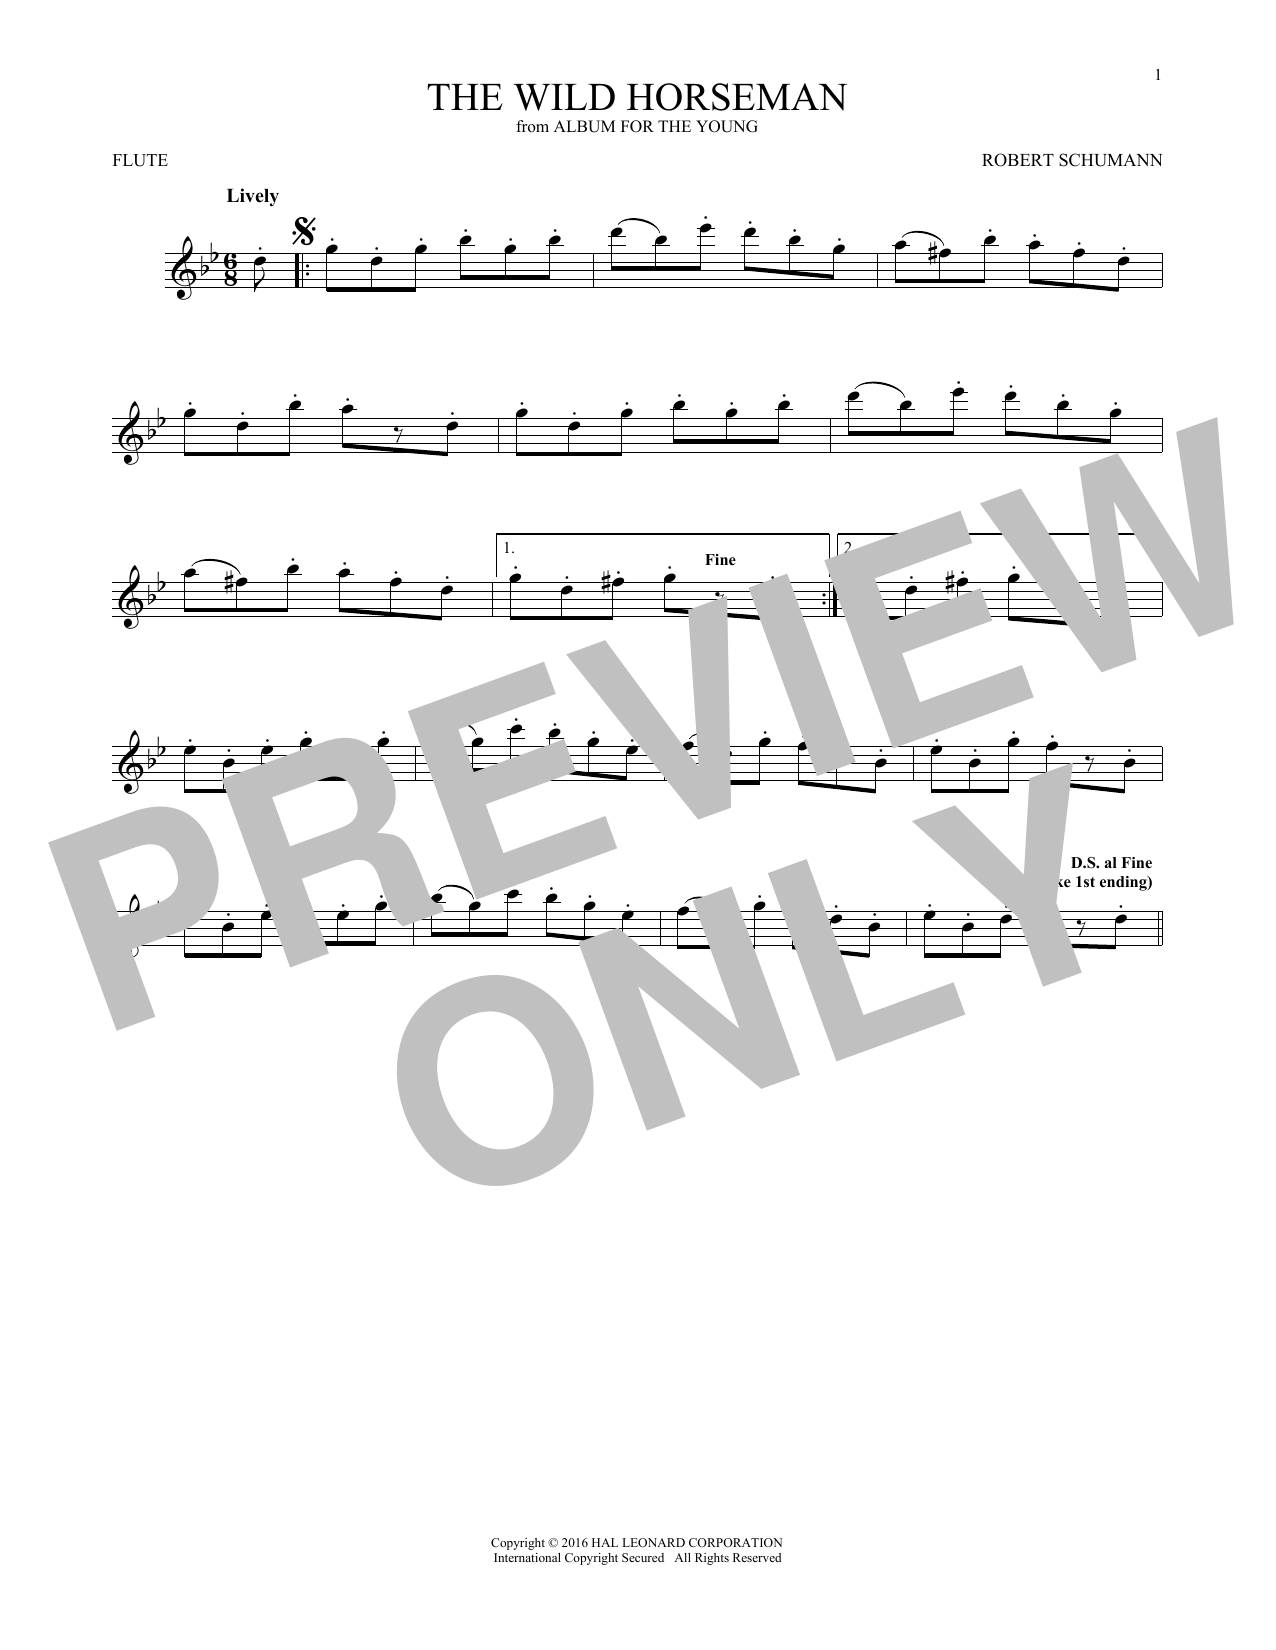 Robert Schumann The Wild Horseman (Wilder Reiter), Op. 68, No. 8 Sheet Music Notes & Chords for Alto Saxophone - Download or Print PDF